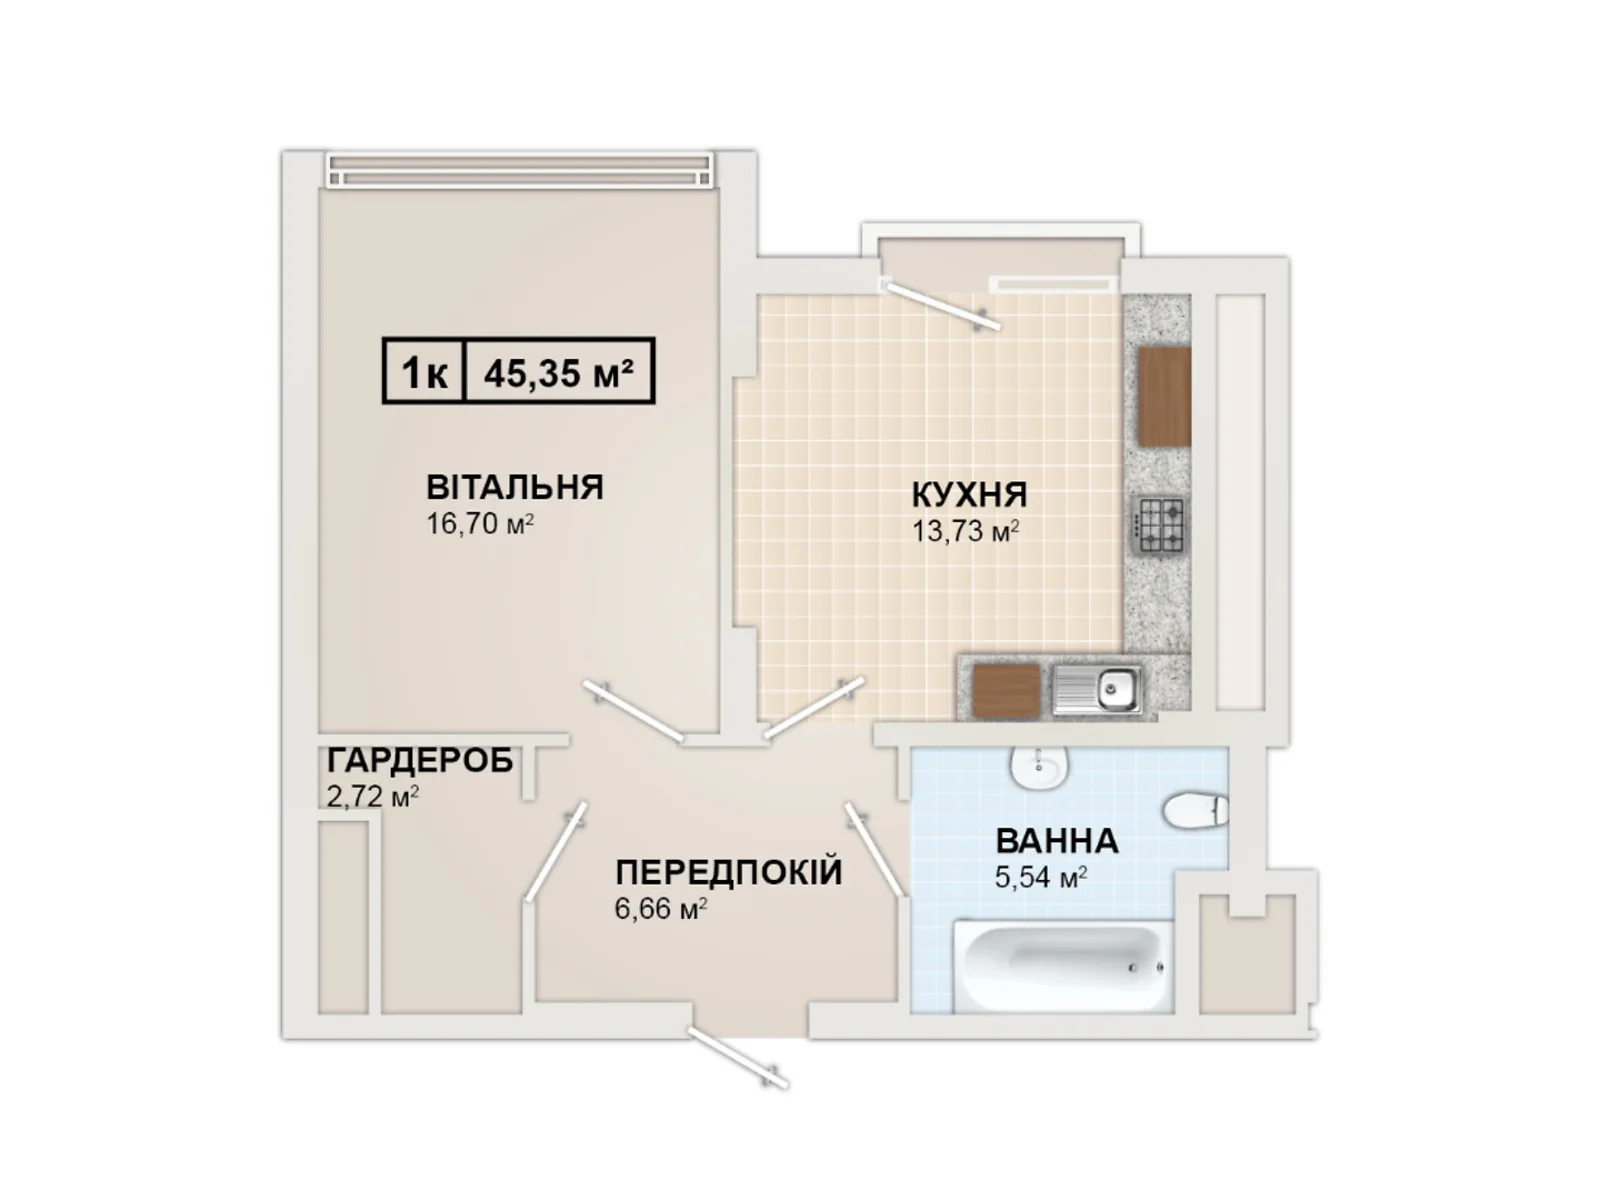 Продается 1-комнатная квартира 43.16 кв. м в Ивано-Франковске - фото 1